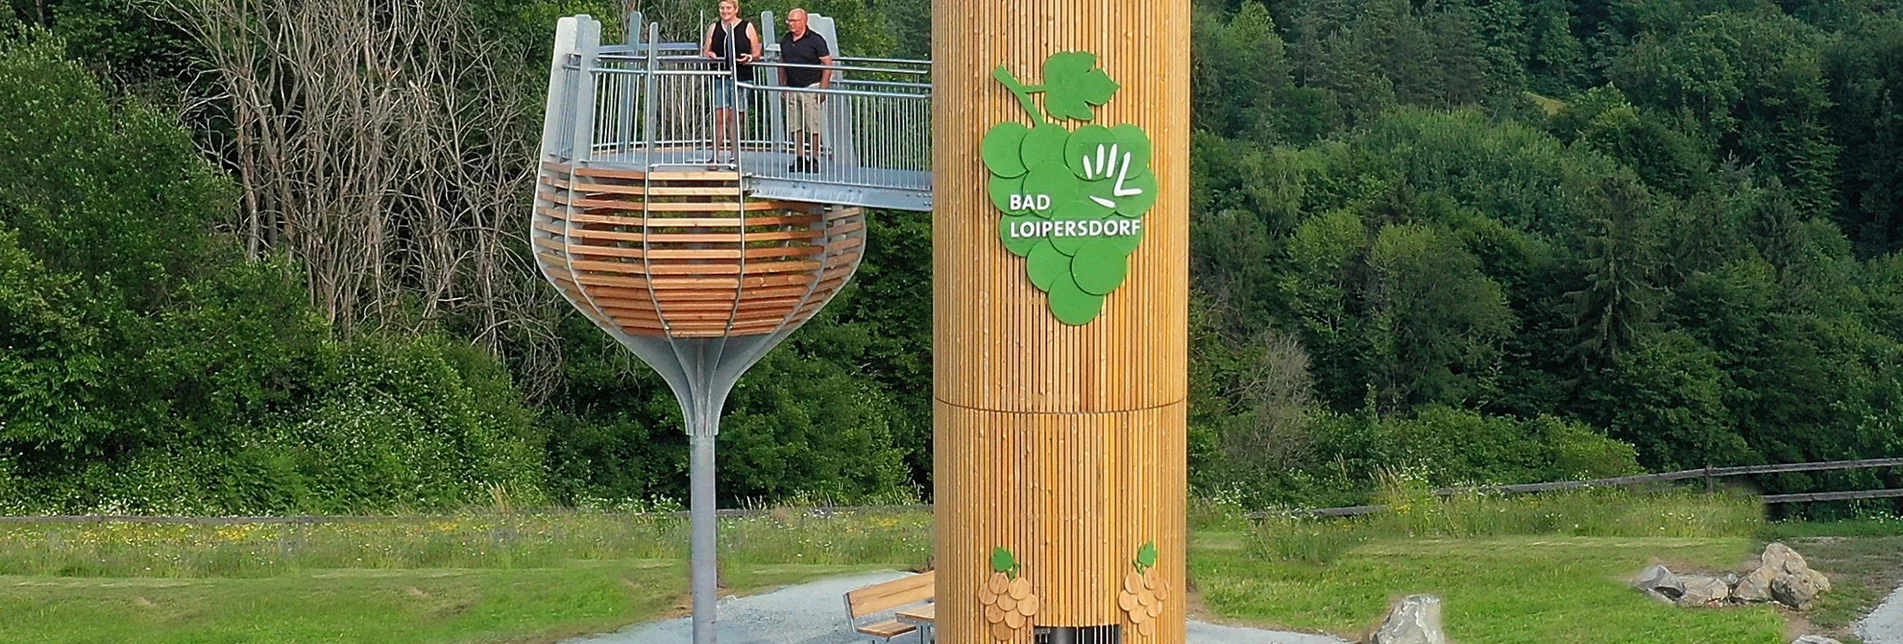 Themenweg Wein-Erlebnis-Weg Bad Loipersdorf - Touren-Impression #1 | © Gemeinde Bad Loipersdorf